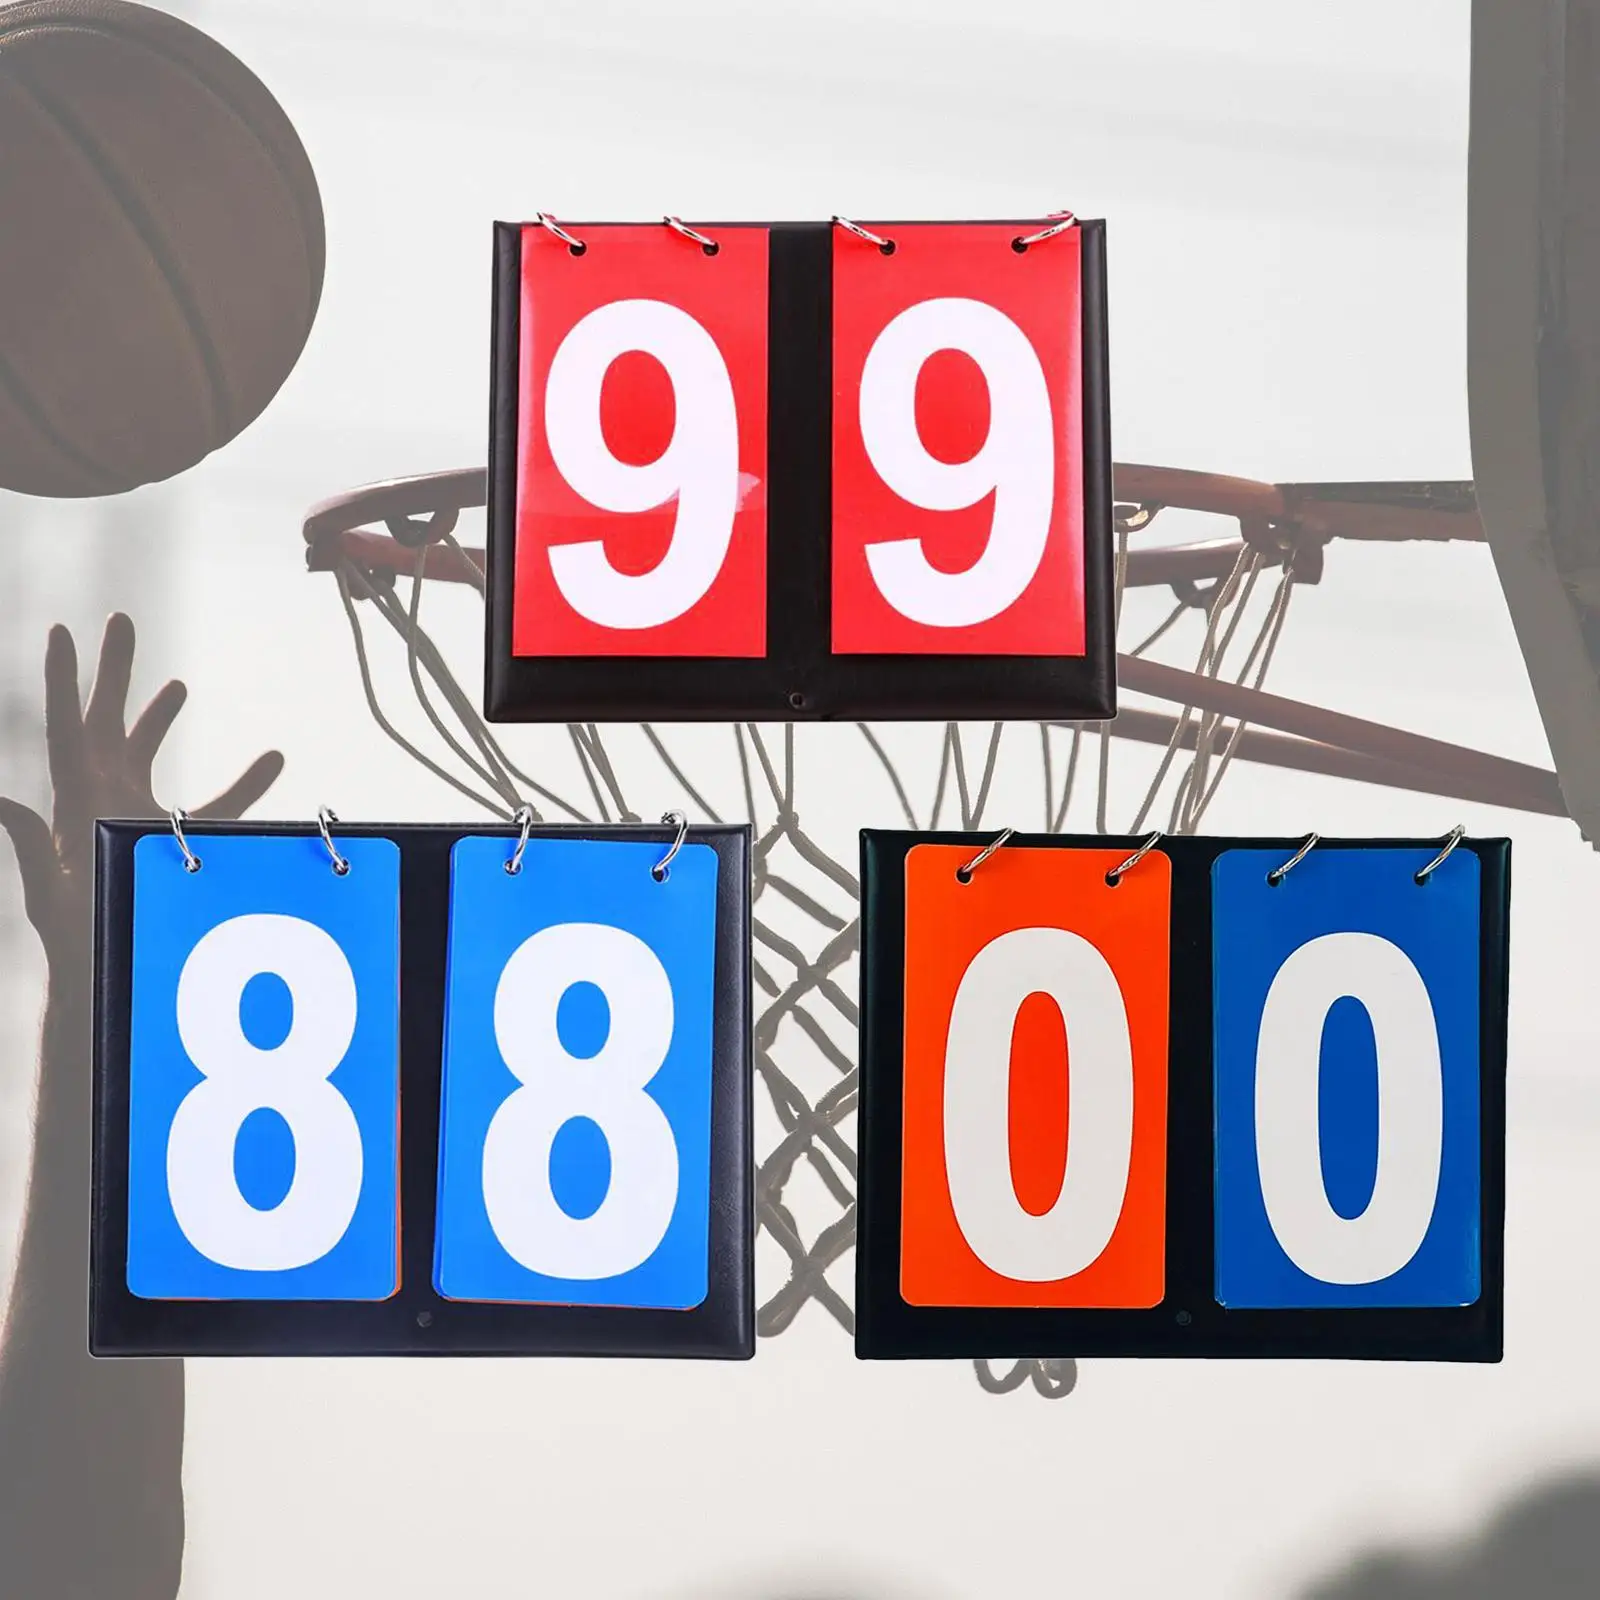 Table Top Scoreboard Scoring Score Keeper for Basketball Outdoor Sports